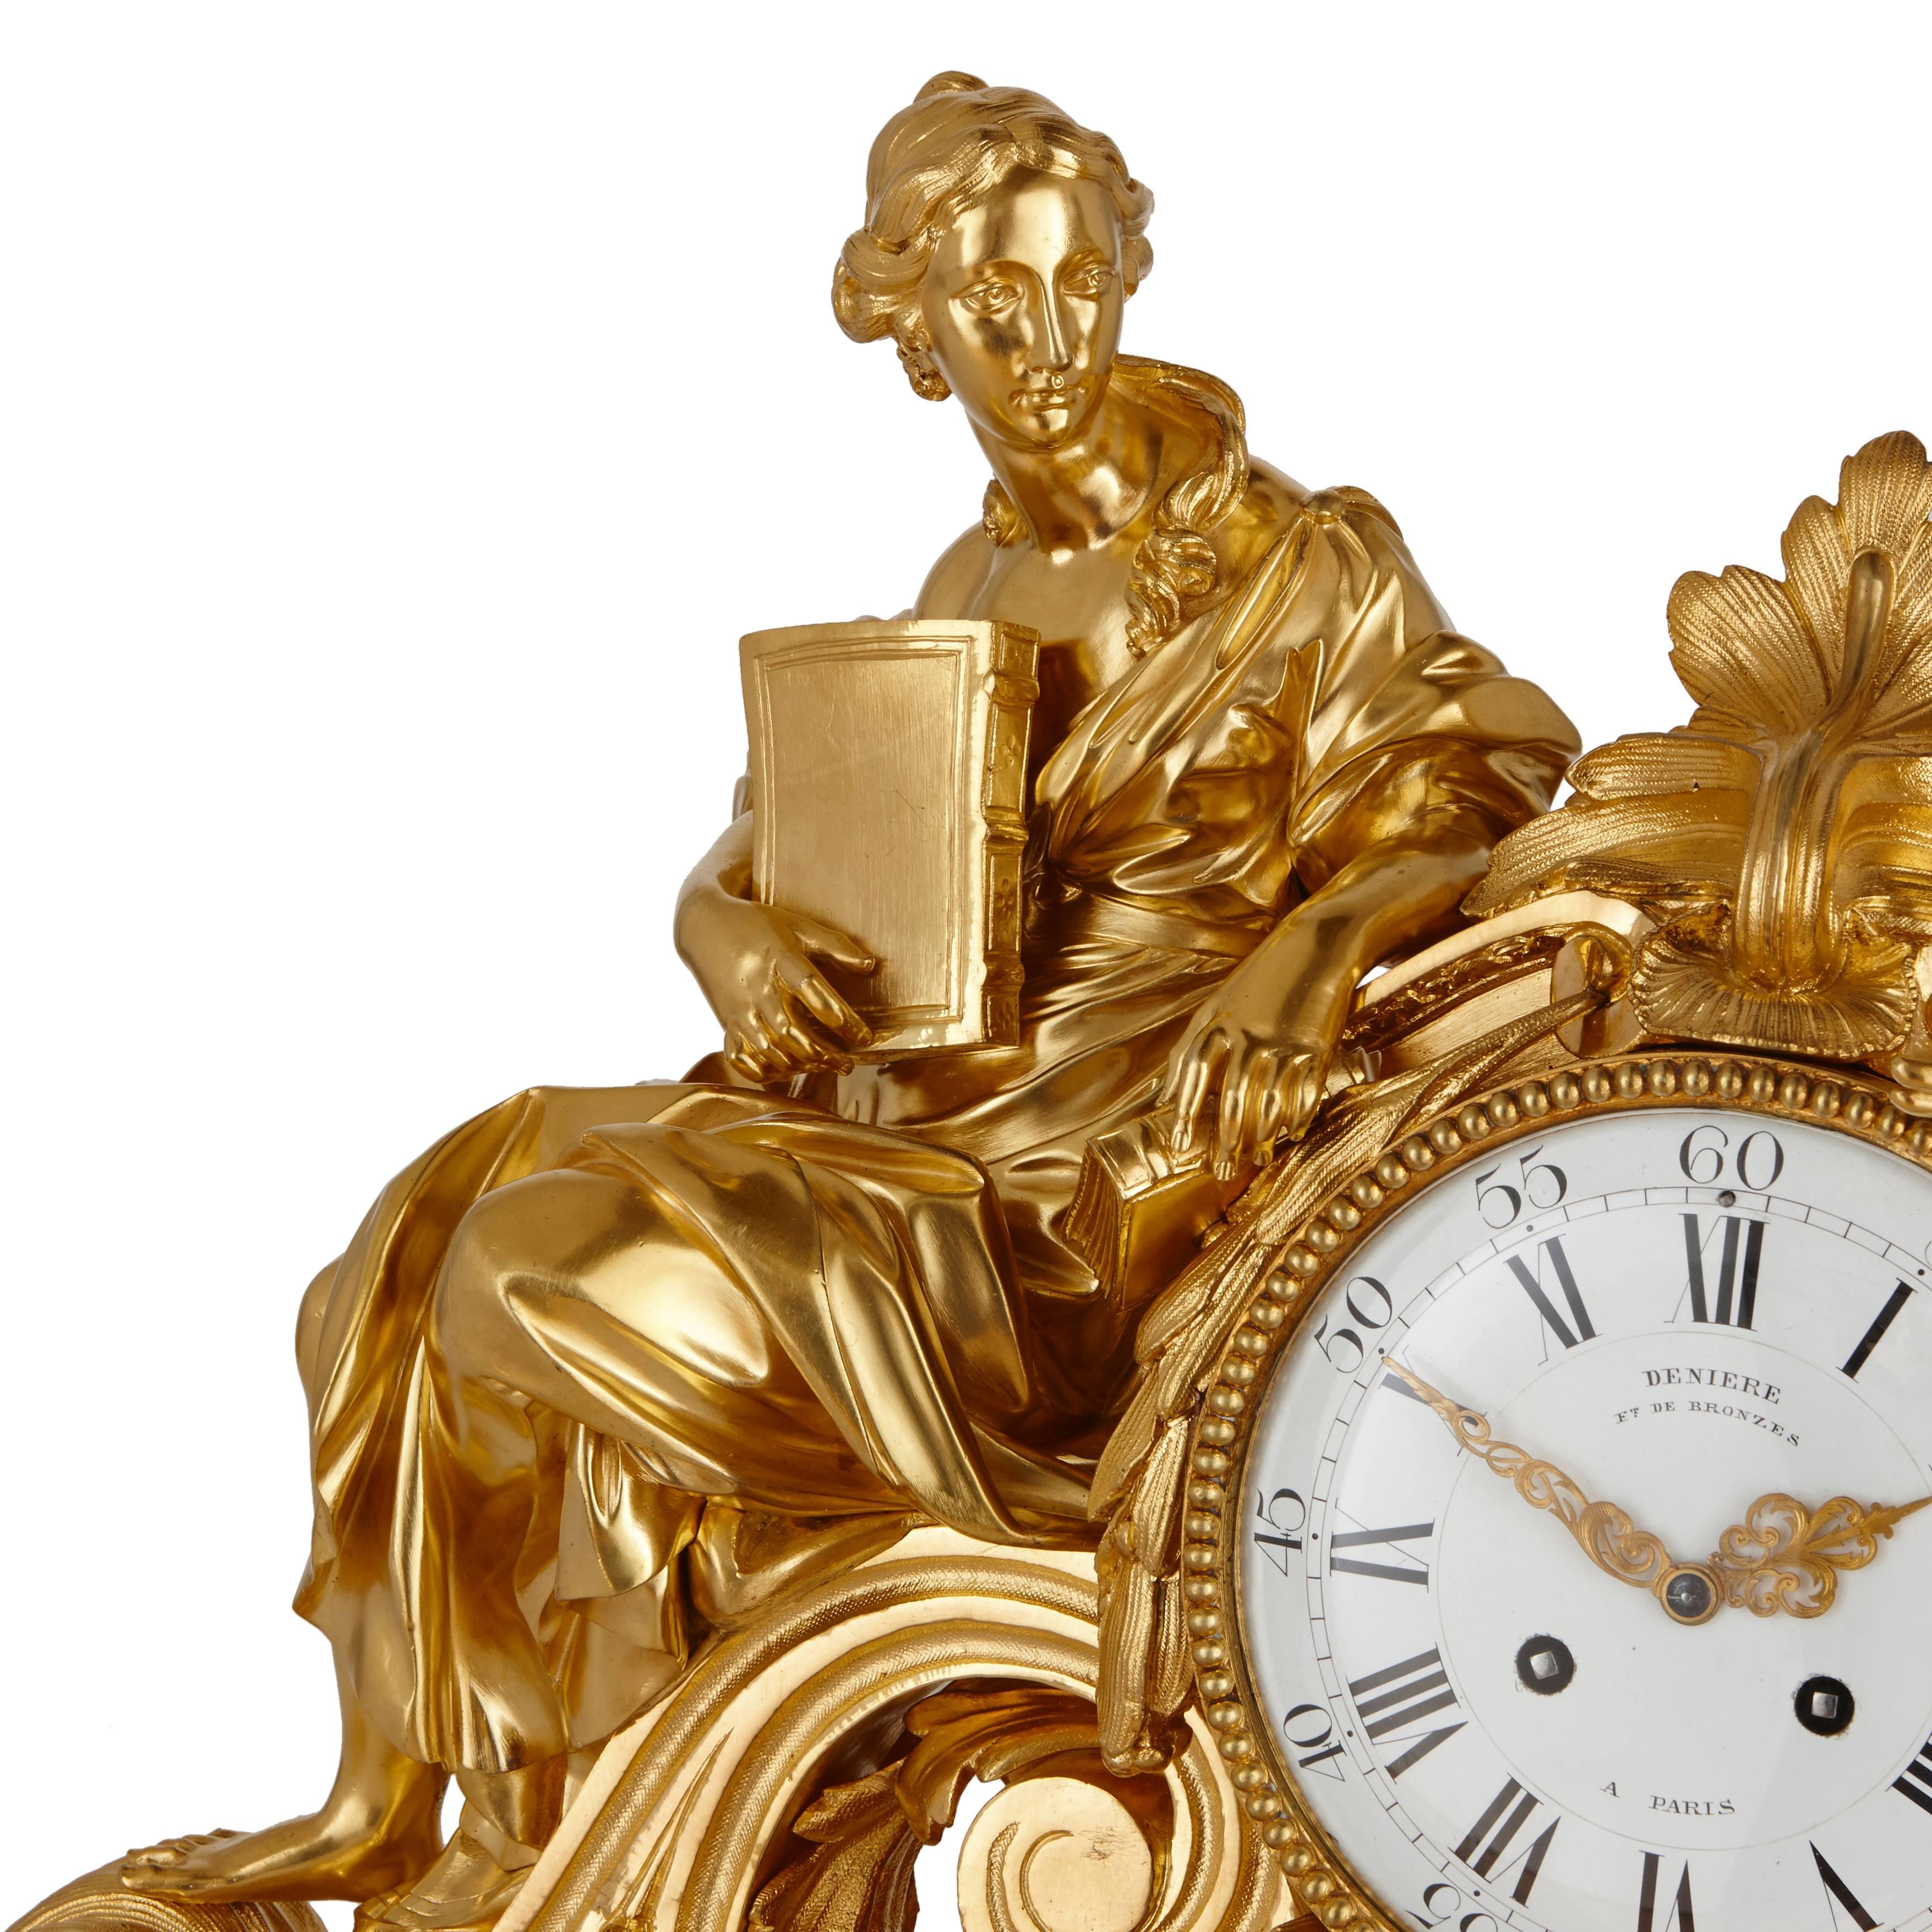 French Fine and Large Ormolu Mantel Clock by DenièRe & Fils